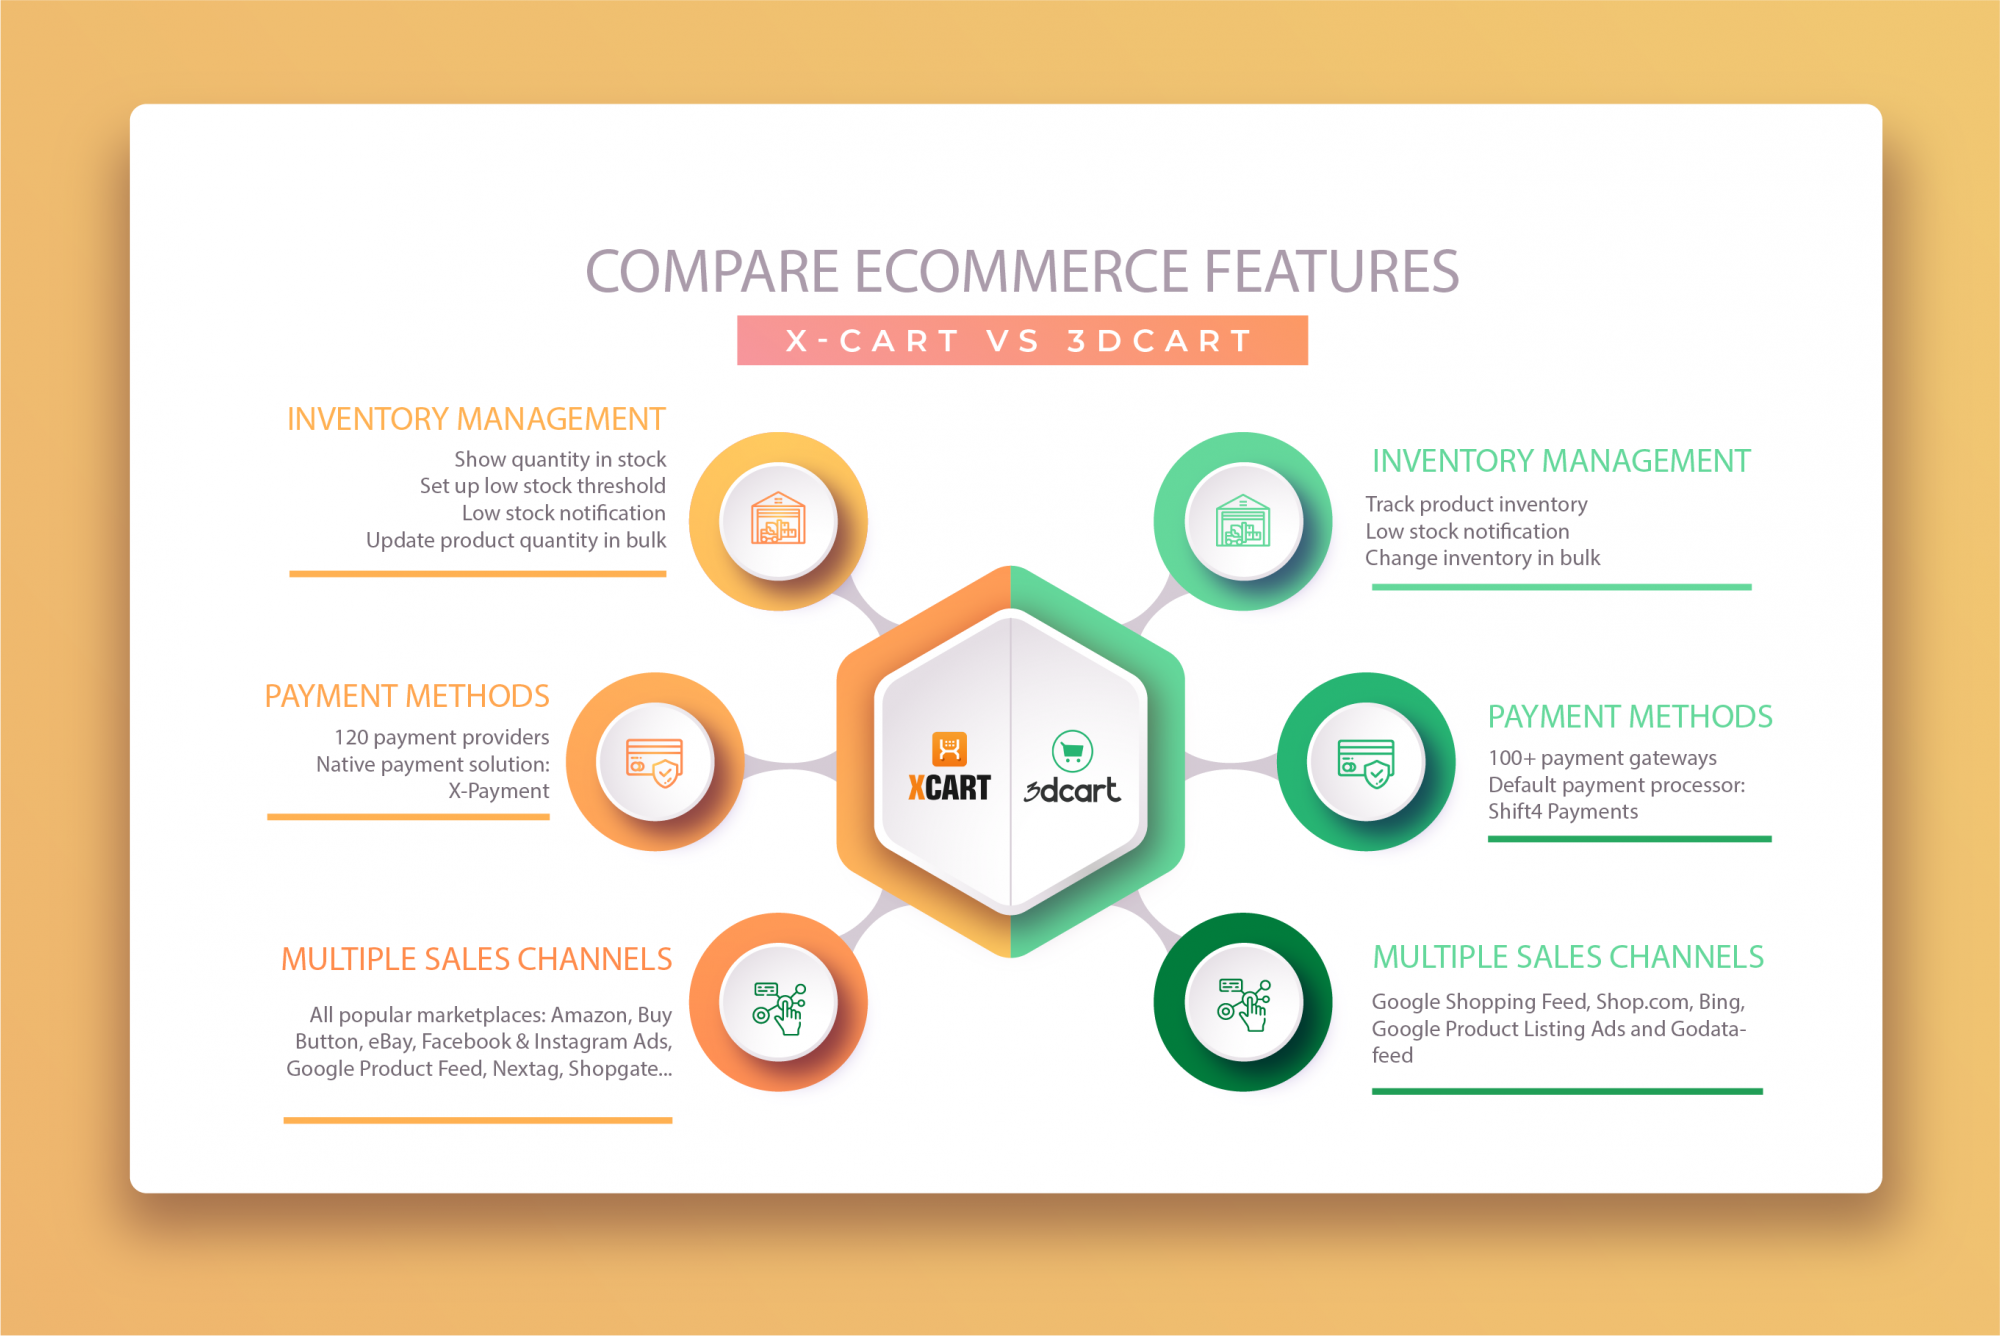 Compare X-Cart vs 3dCart ecommerce features